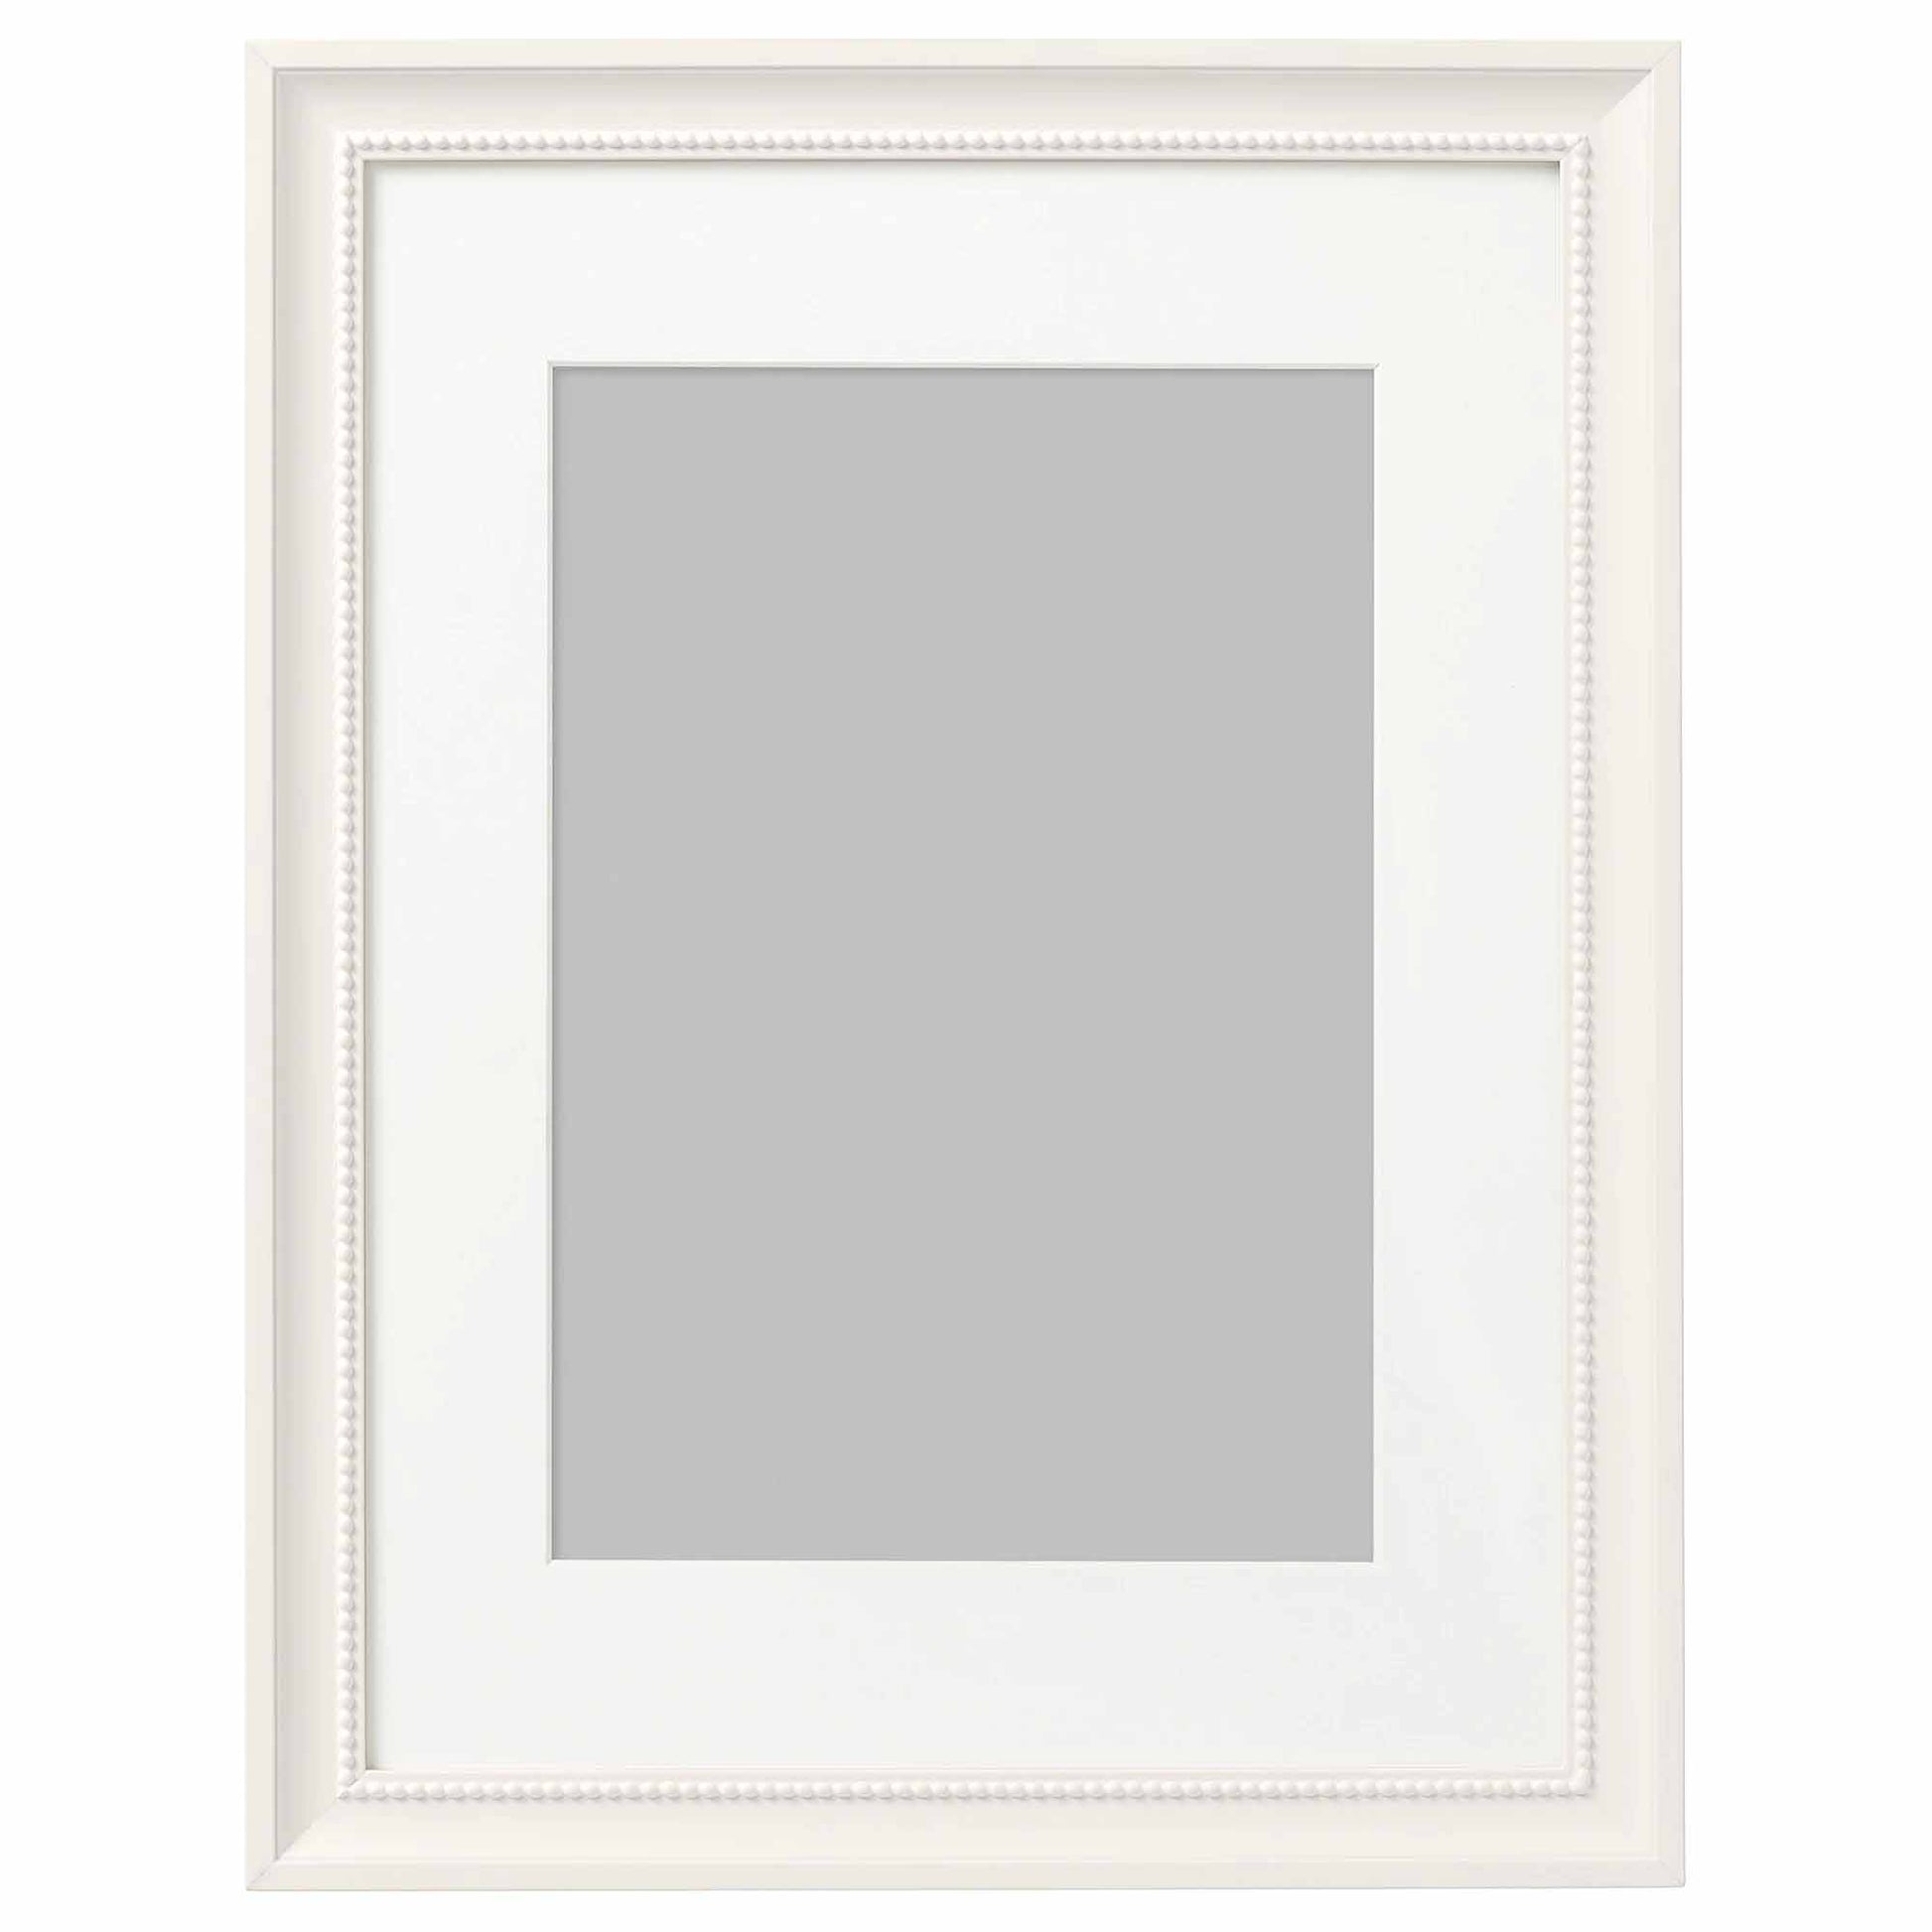 blank decorative white frame